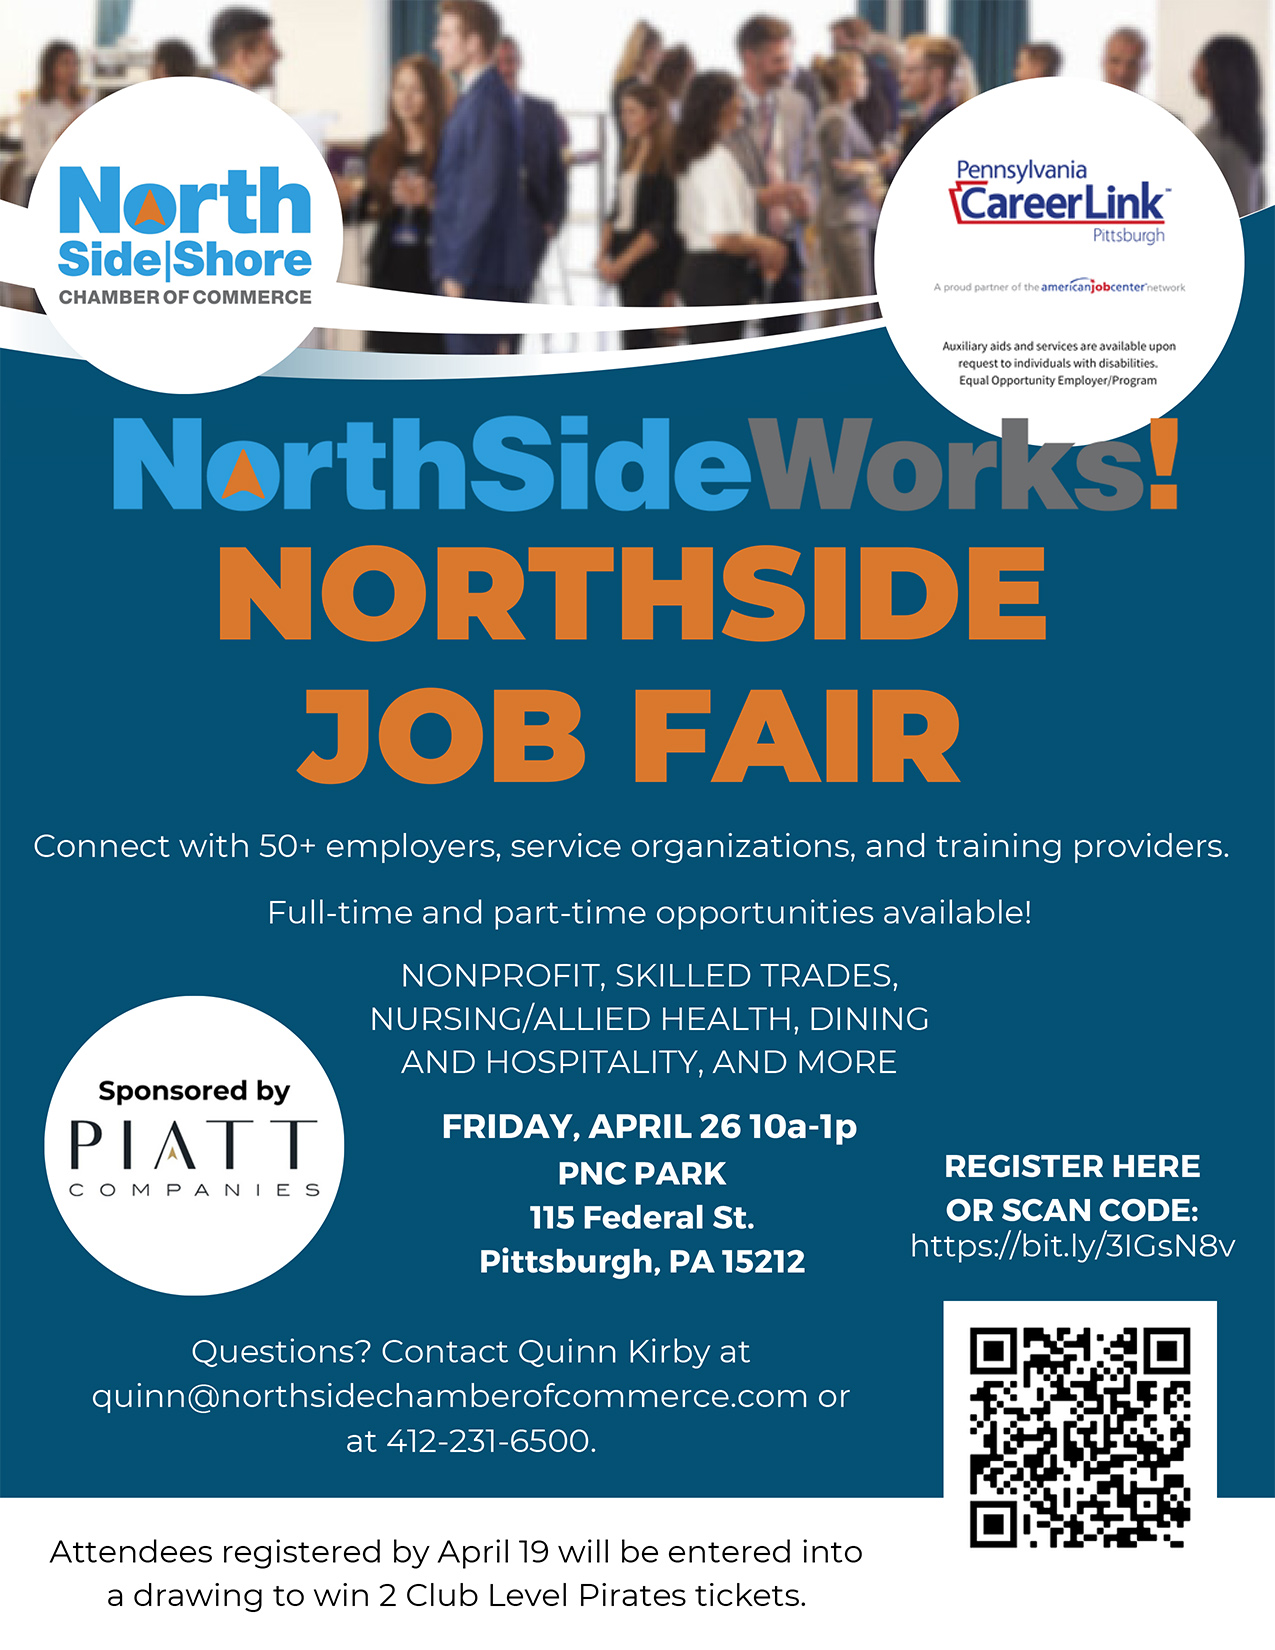 NorthSideWorks! Job Fair Poster